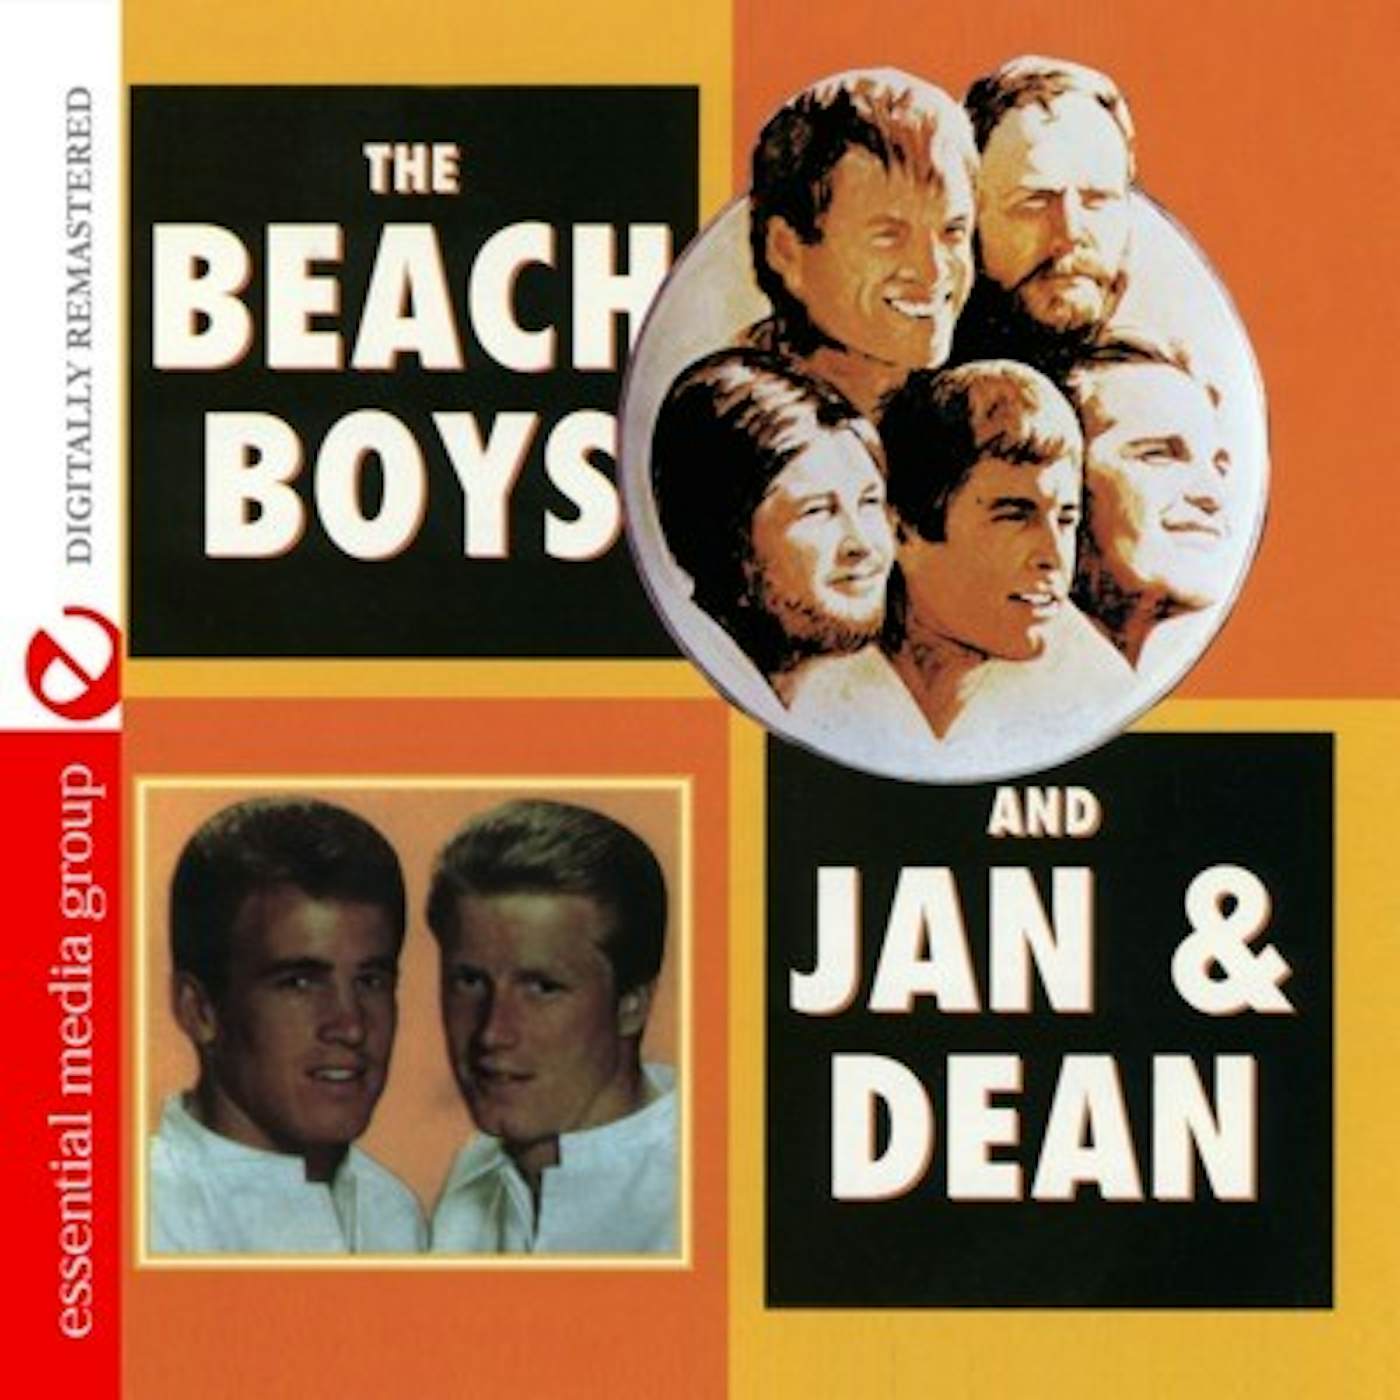 The Beach Boys / JAN & DEAN CD